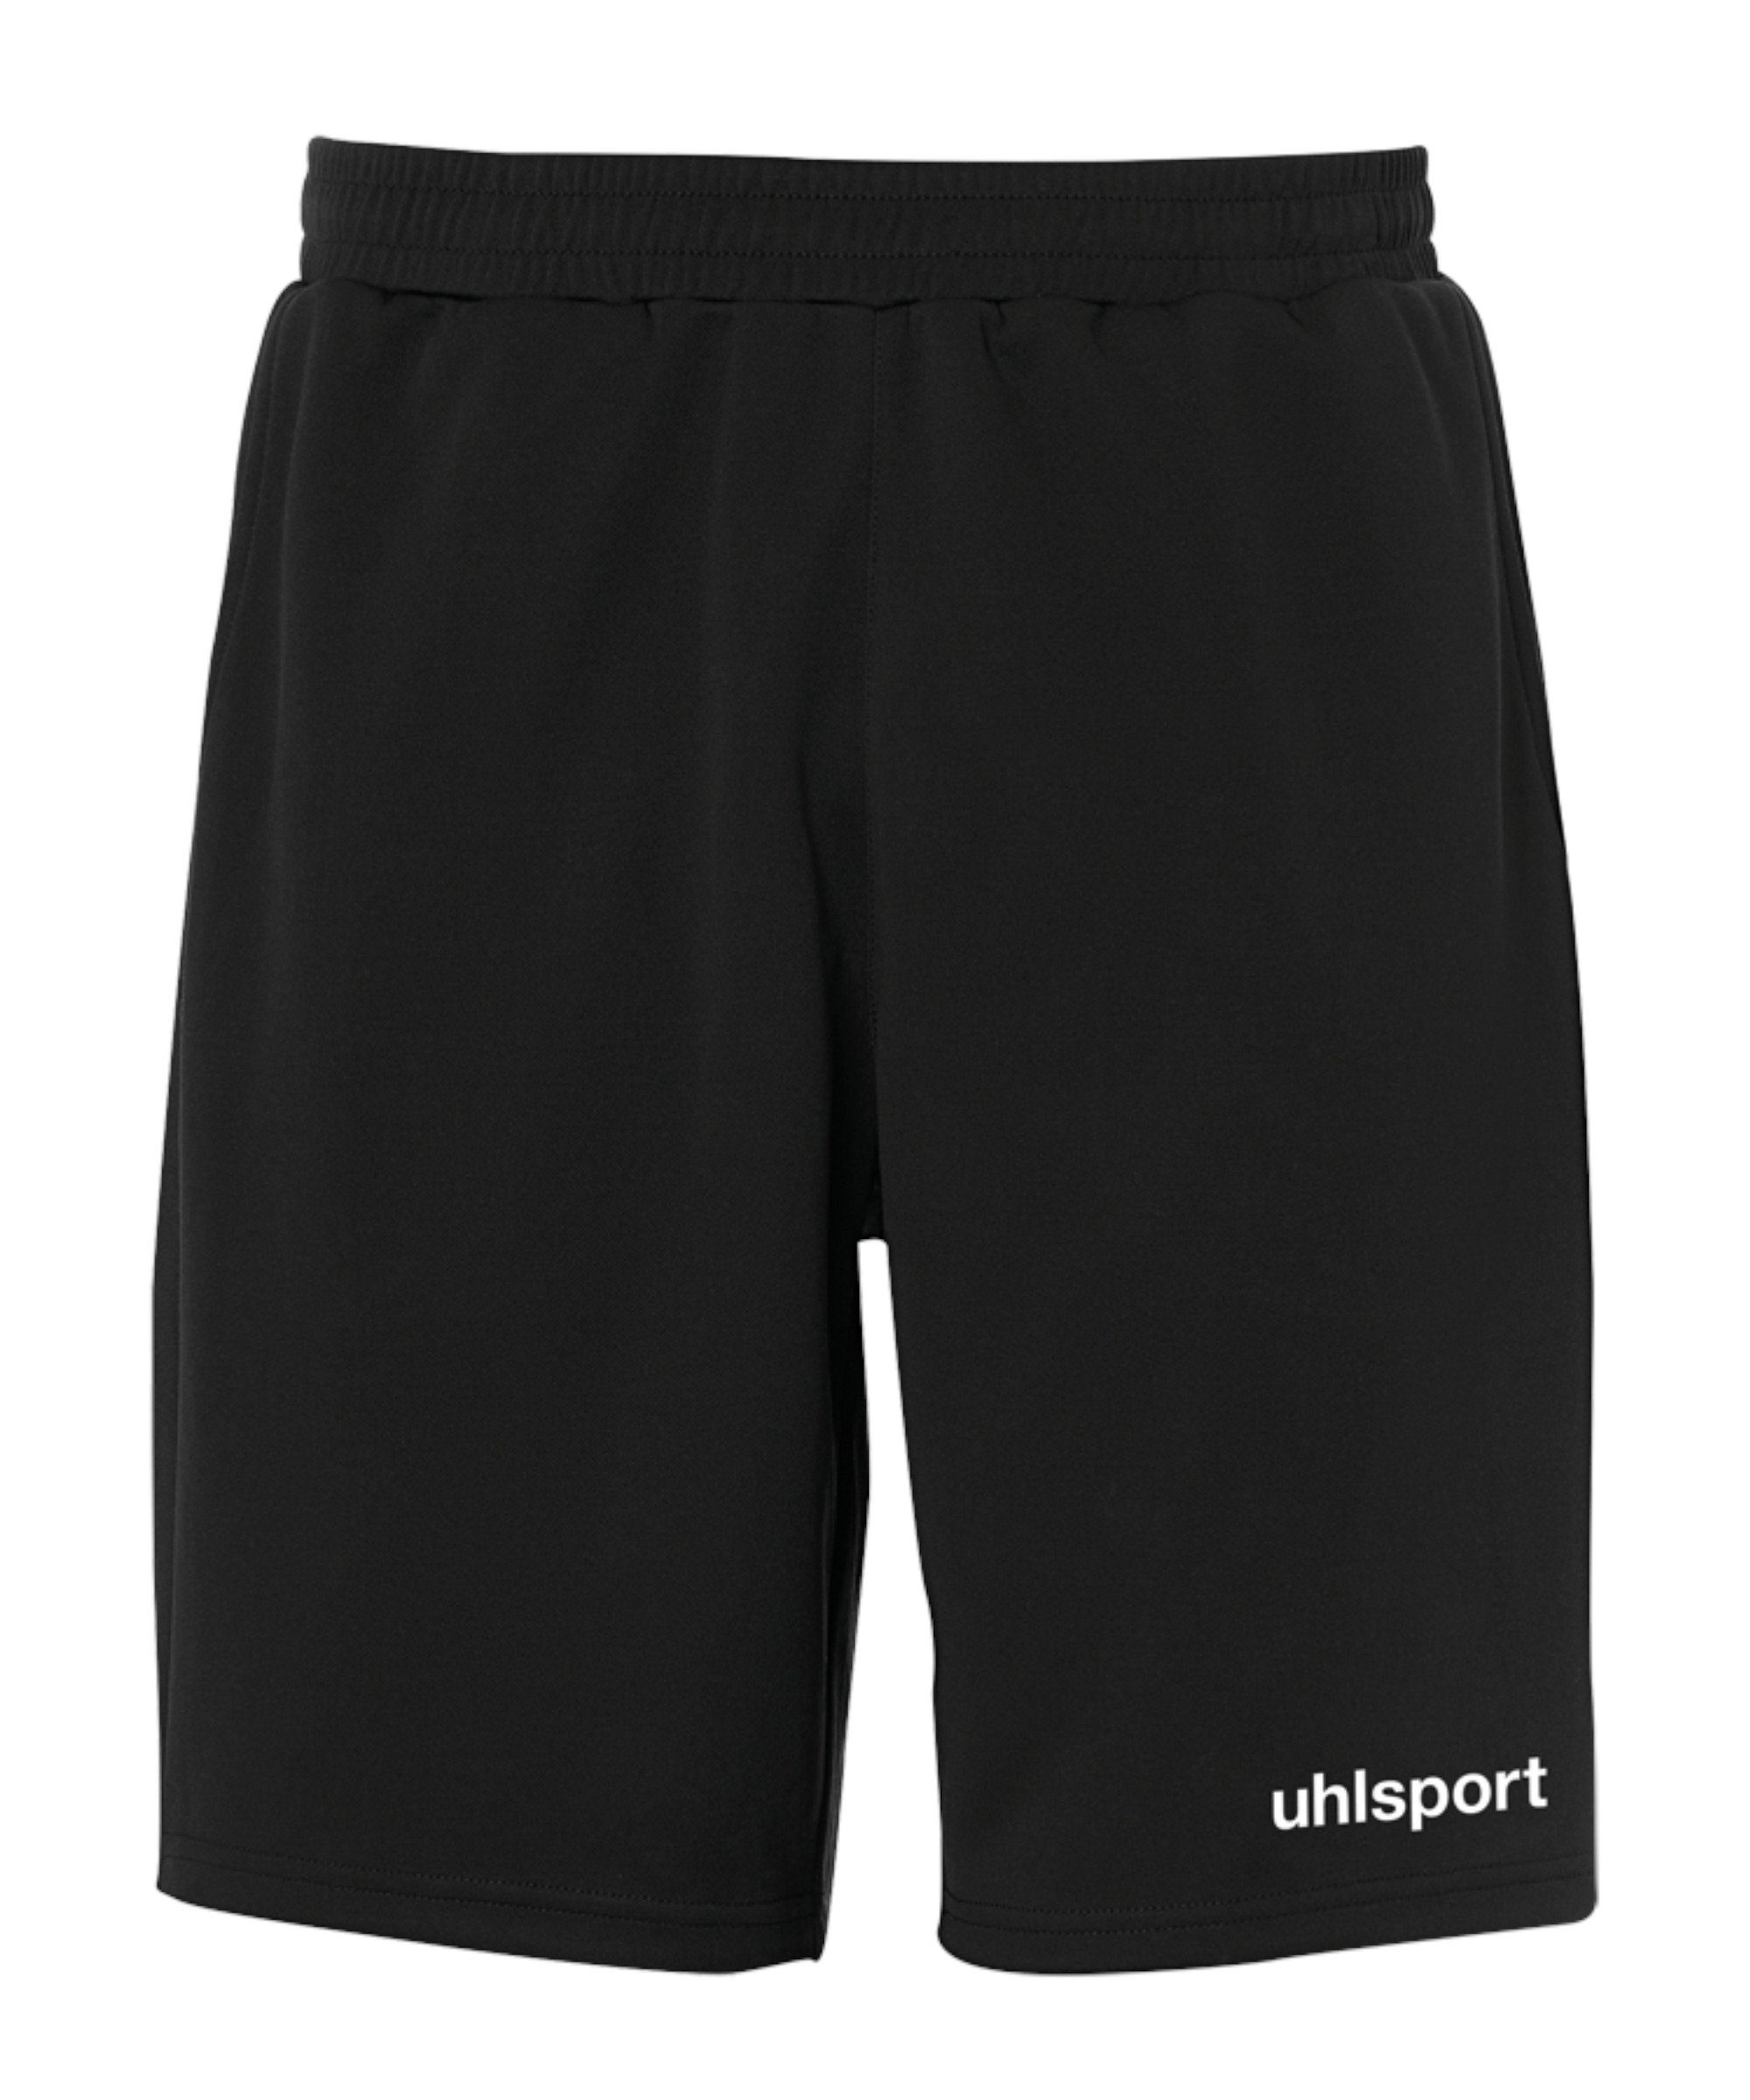 uhlsport Sporthose Essential PES-Short